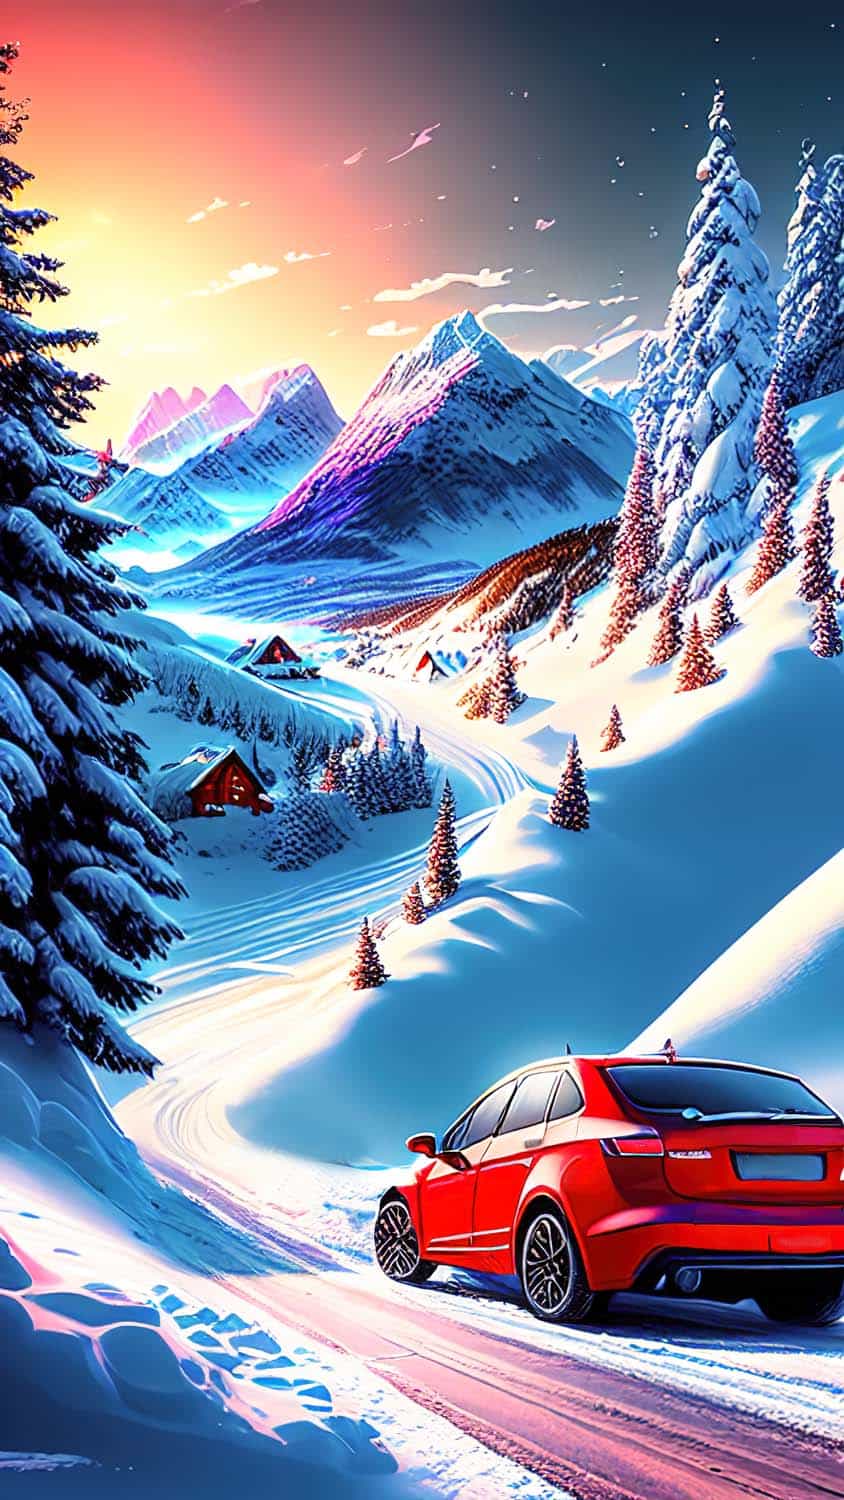 Snow Drive iPhone Wallpaper HD